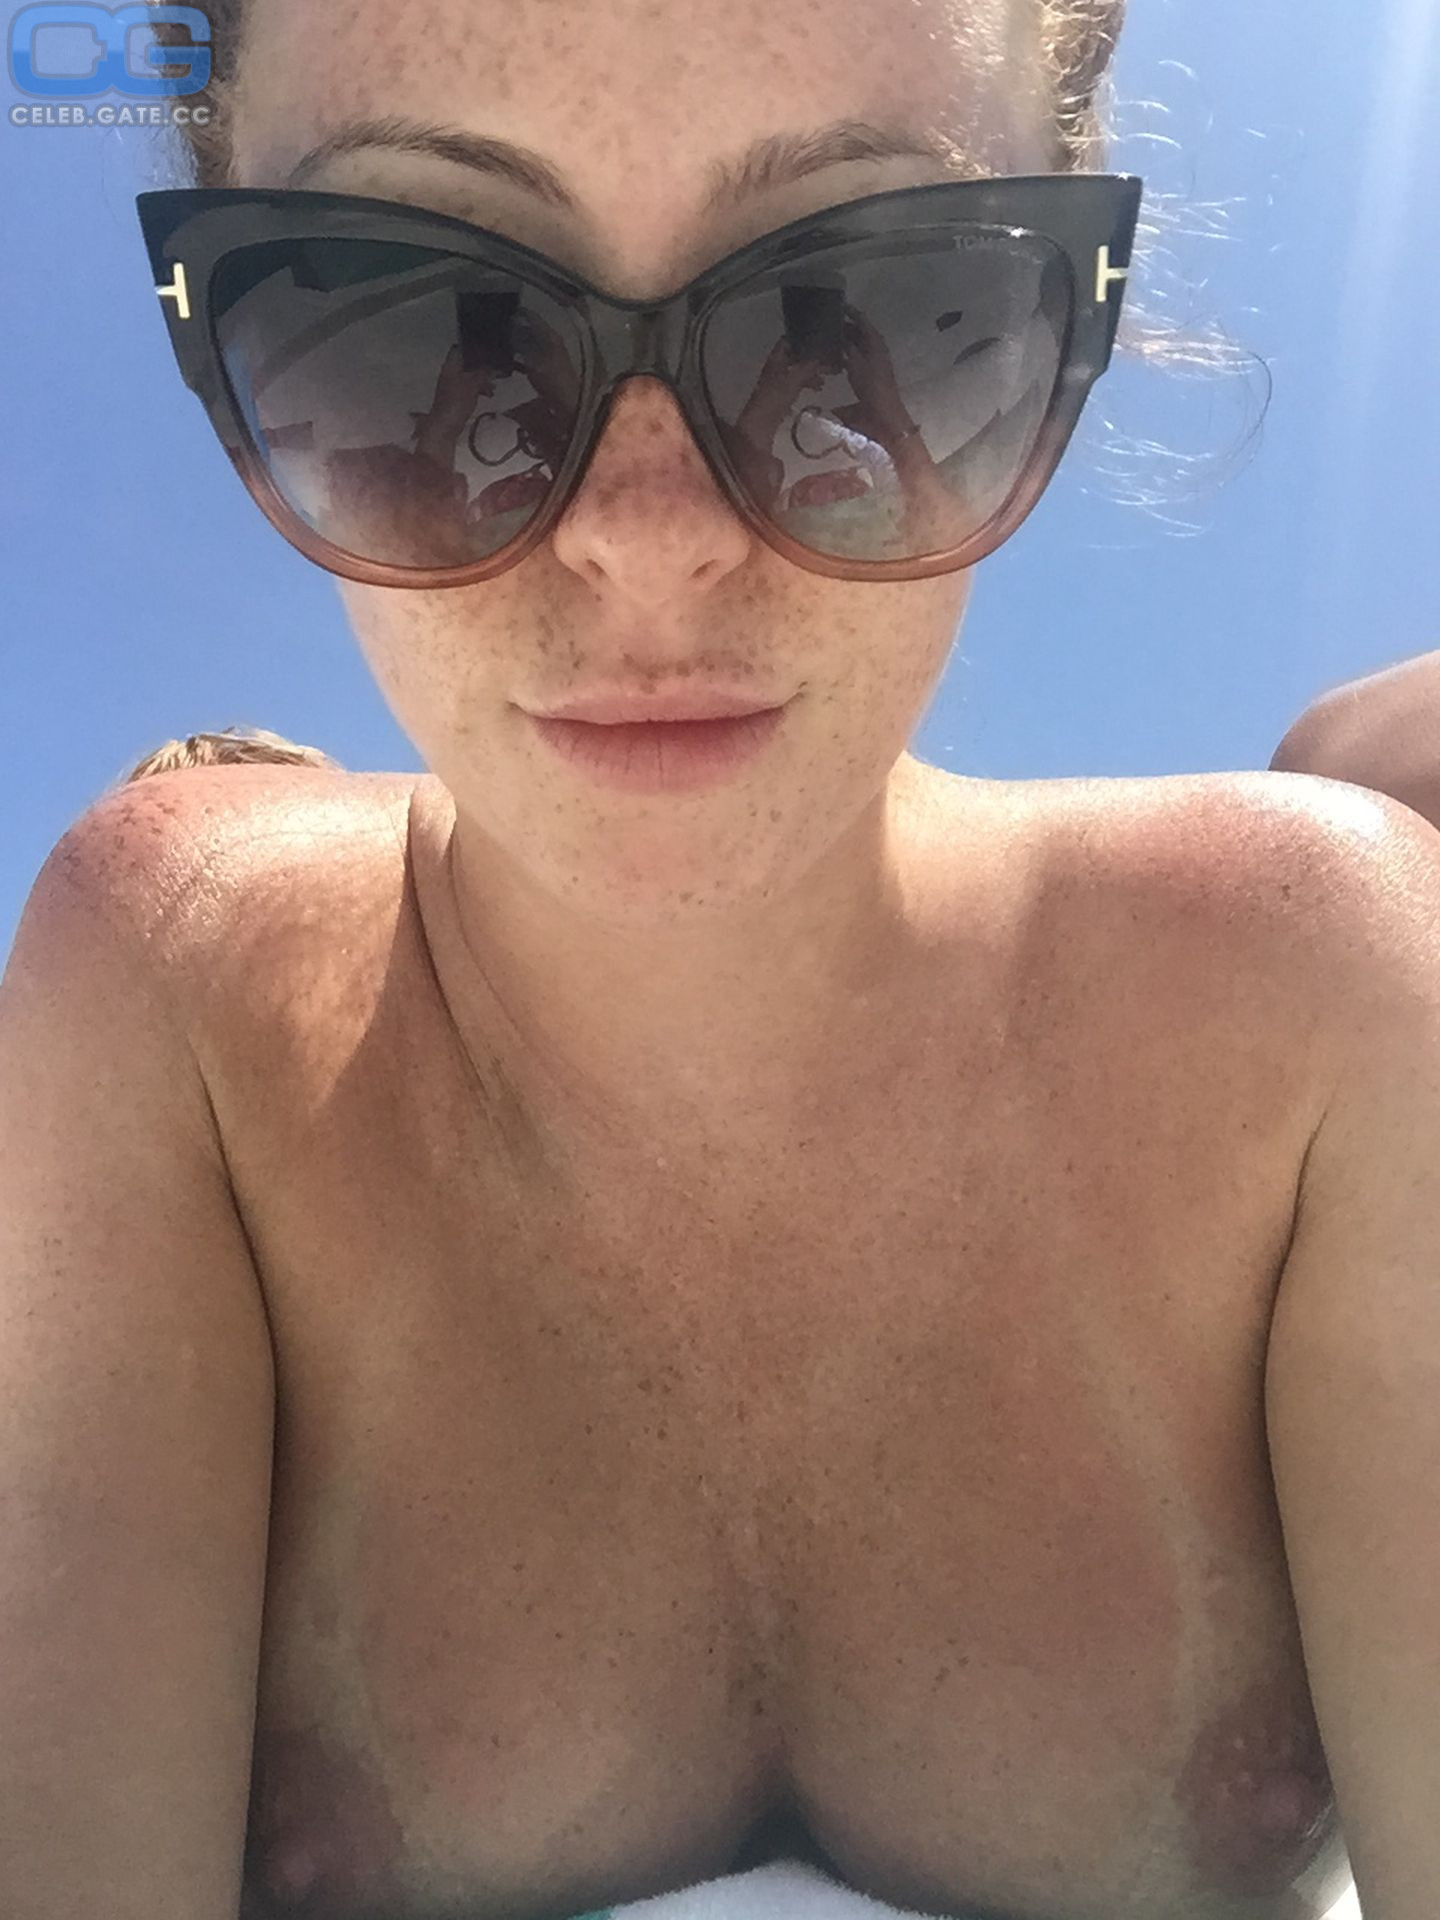 Natasha Hamilton nude selfie